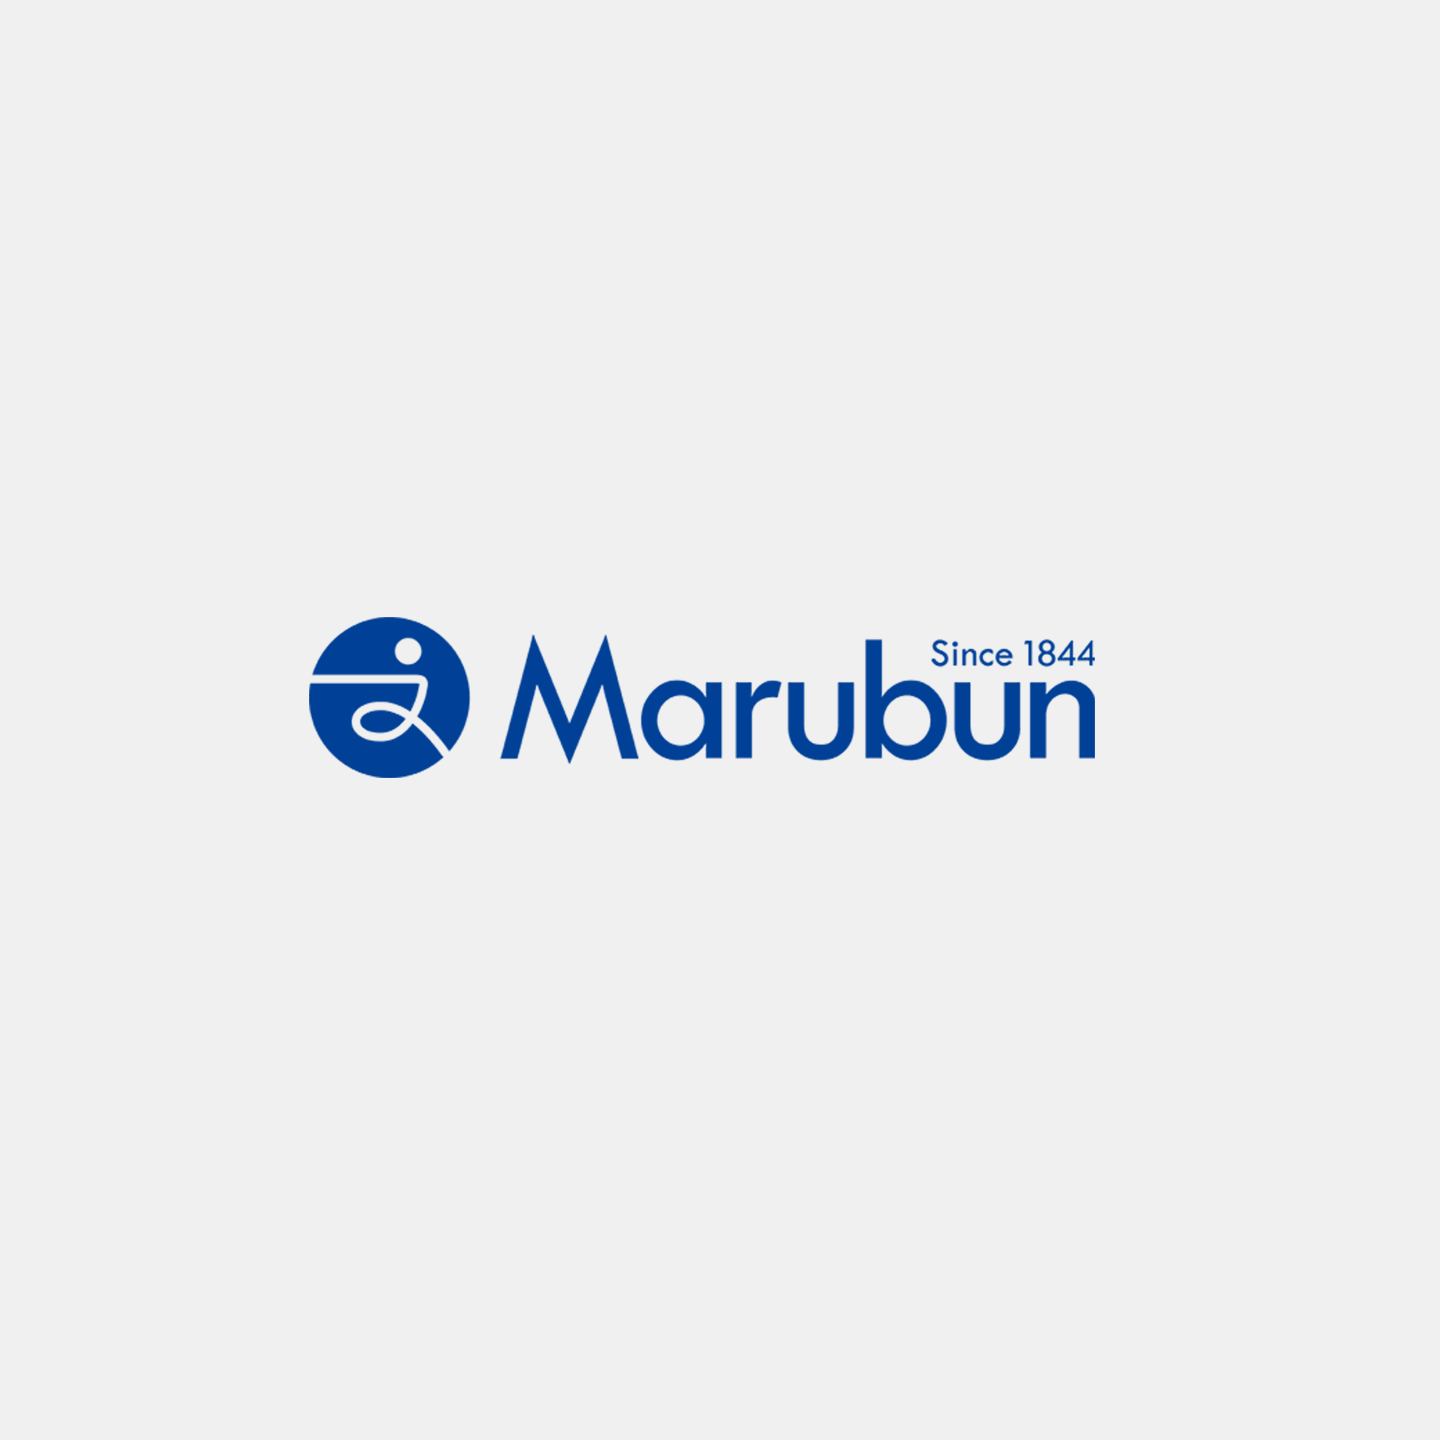 Marubun logo grey background